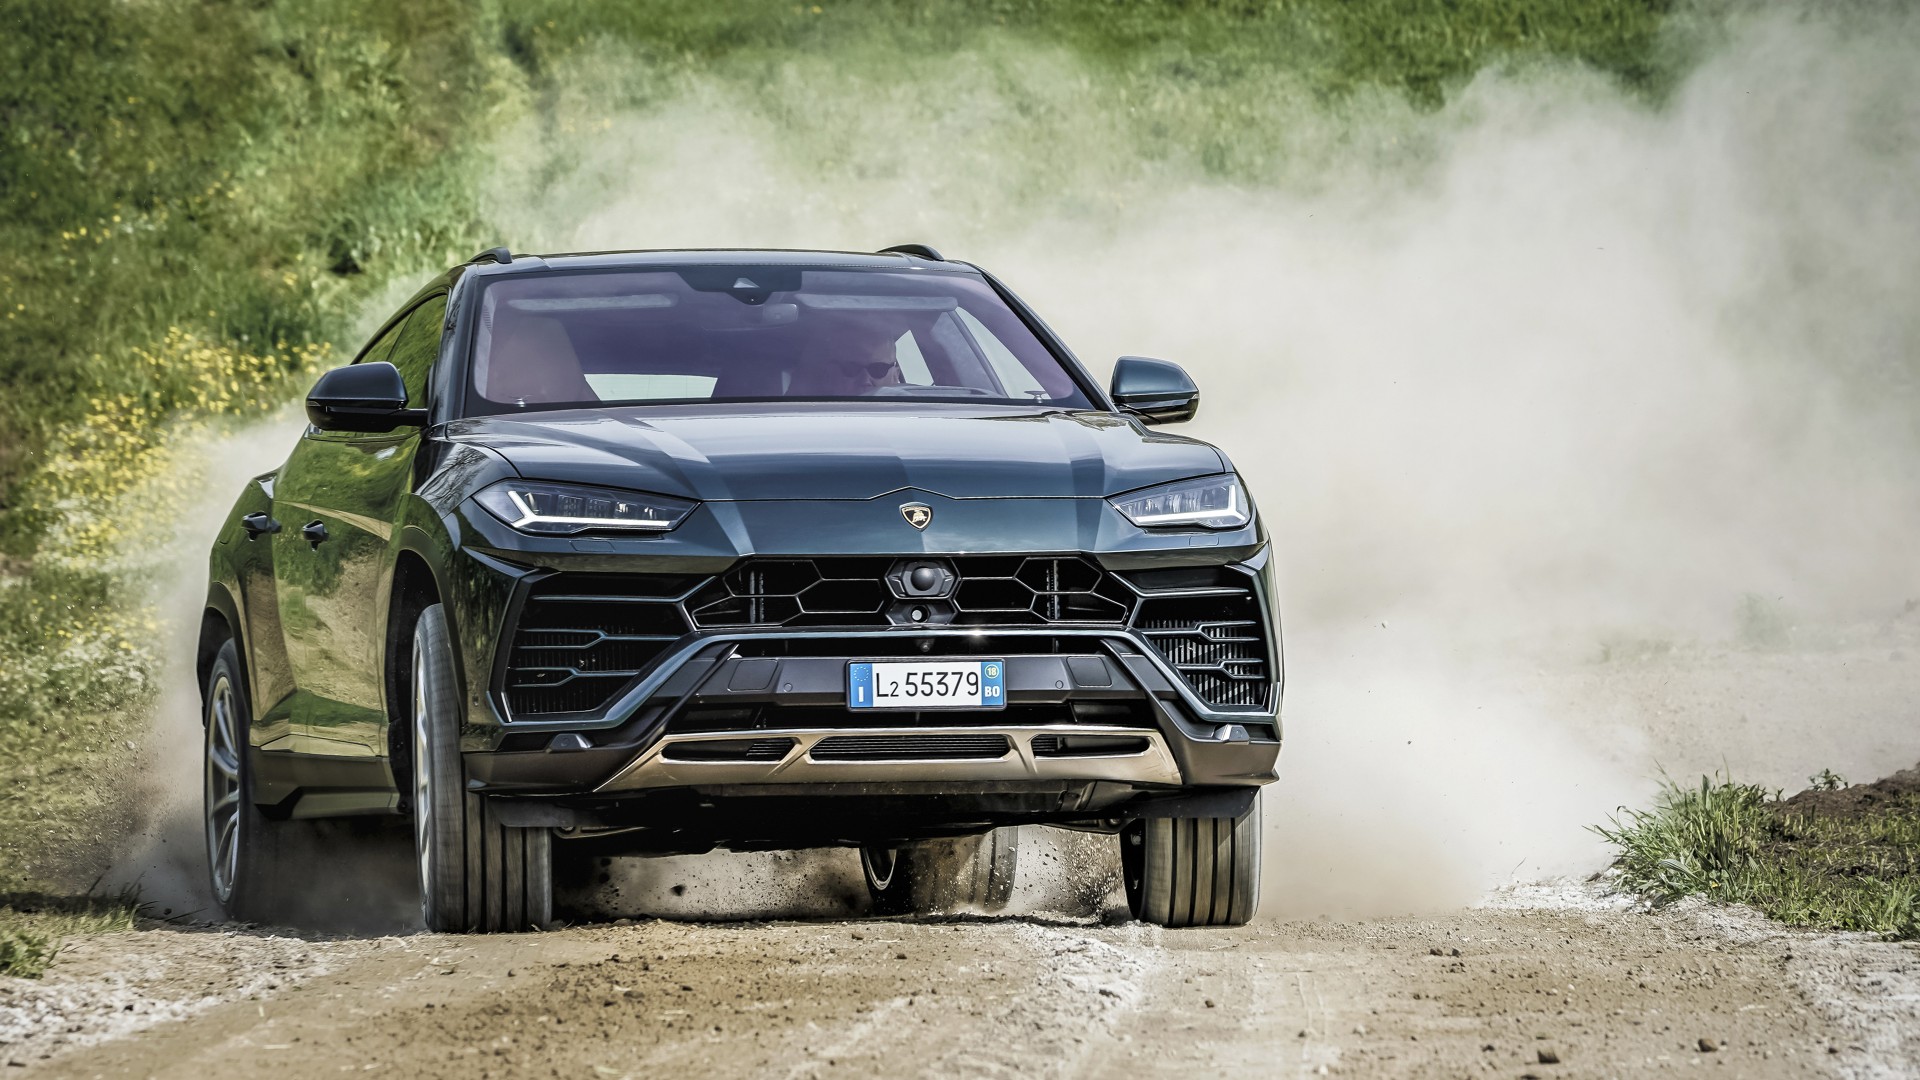 Lamborghini Urus Off-Road Package 2018 4K 2 Wallpaper | HD Car